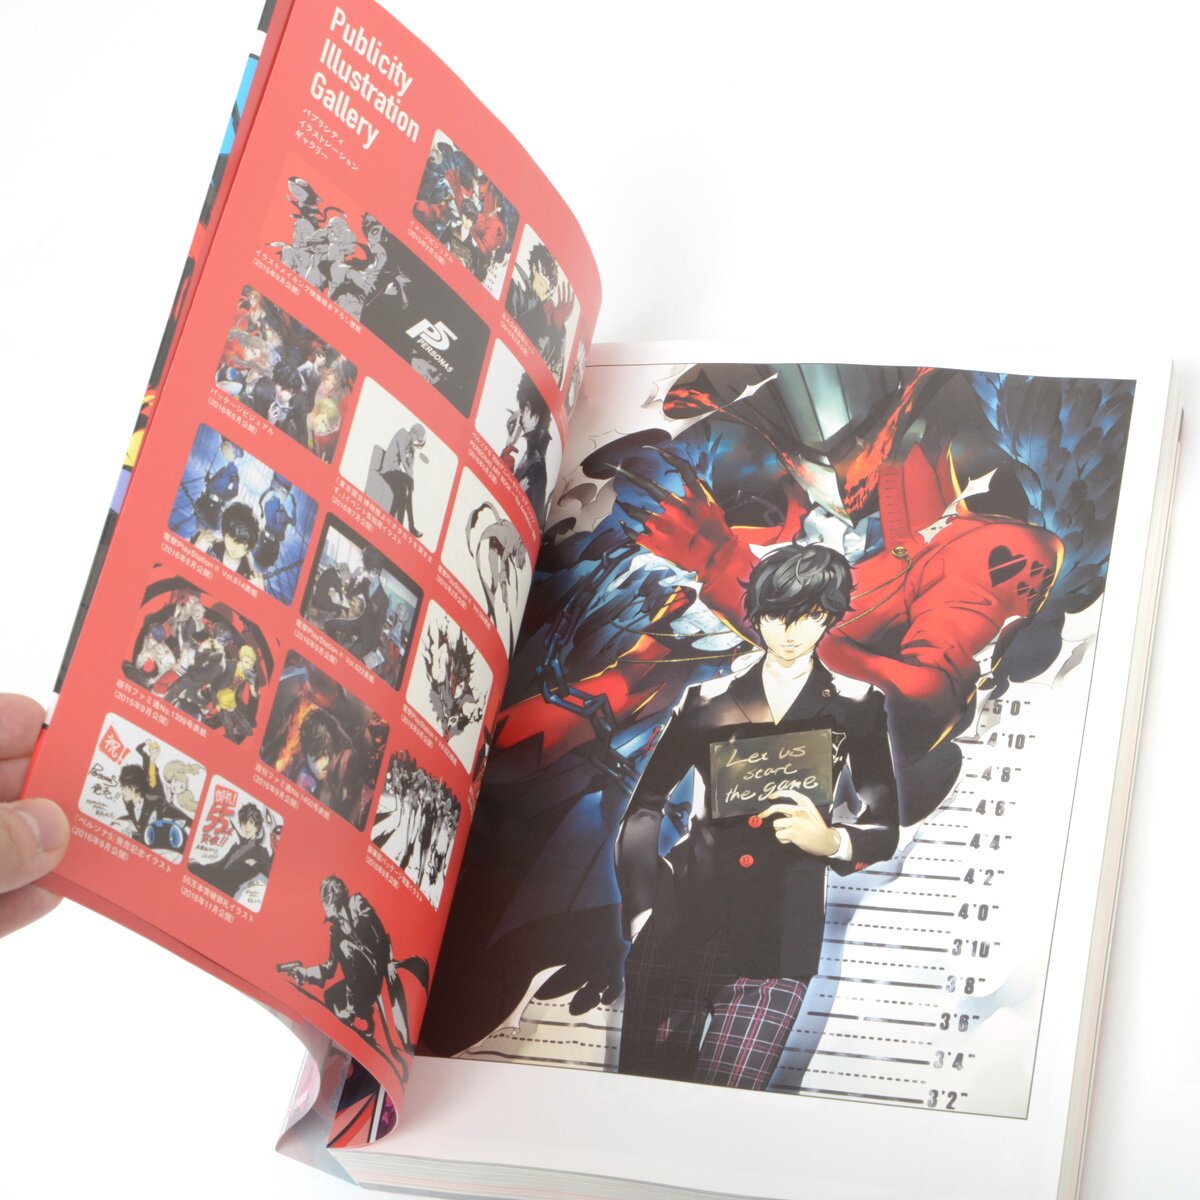 Persona 5 Official Setting Guide Book 41 Off Tokyo Otaku Mode Tom